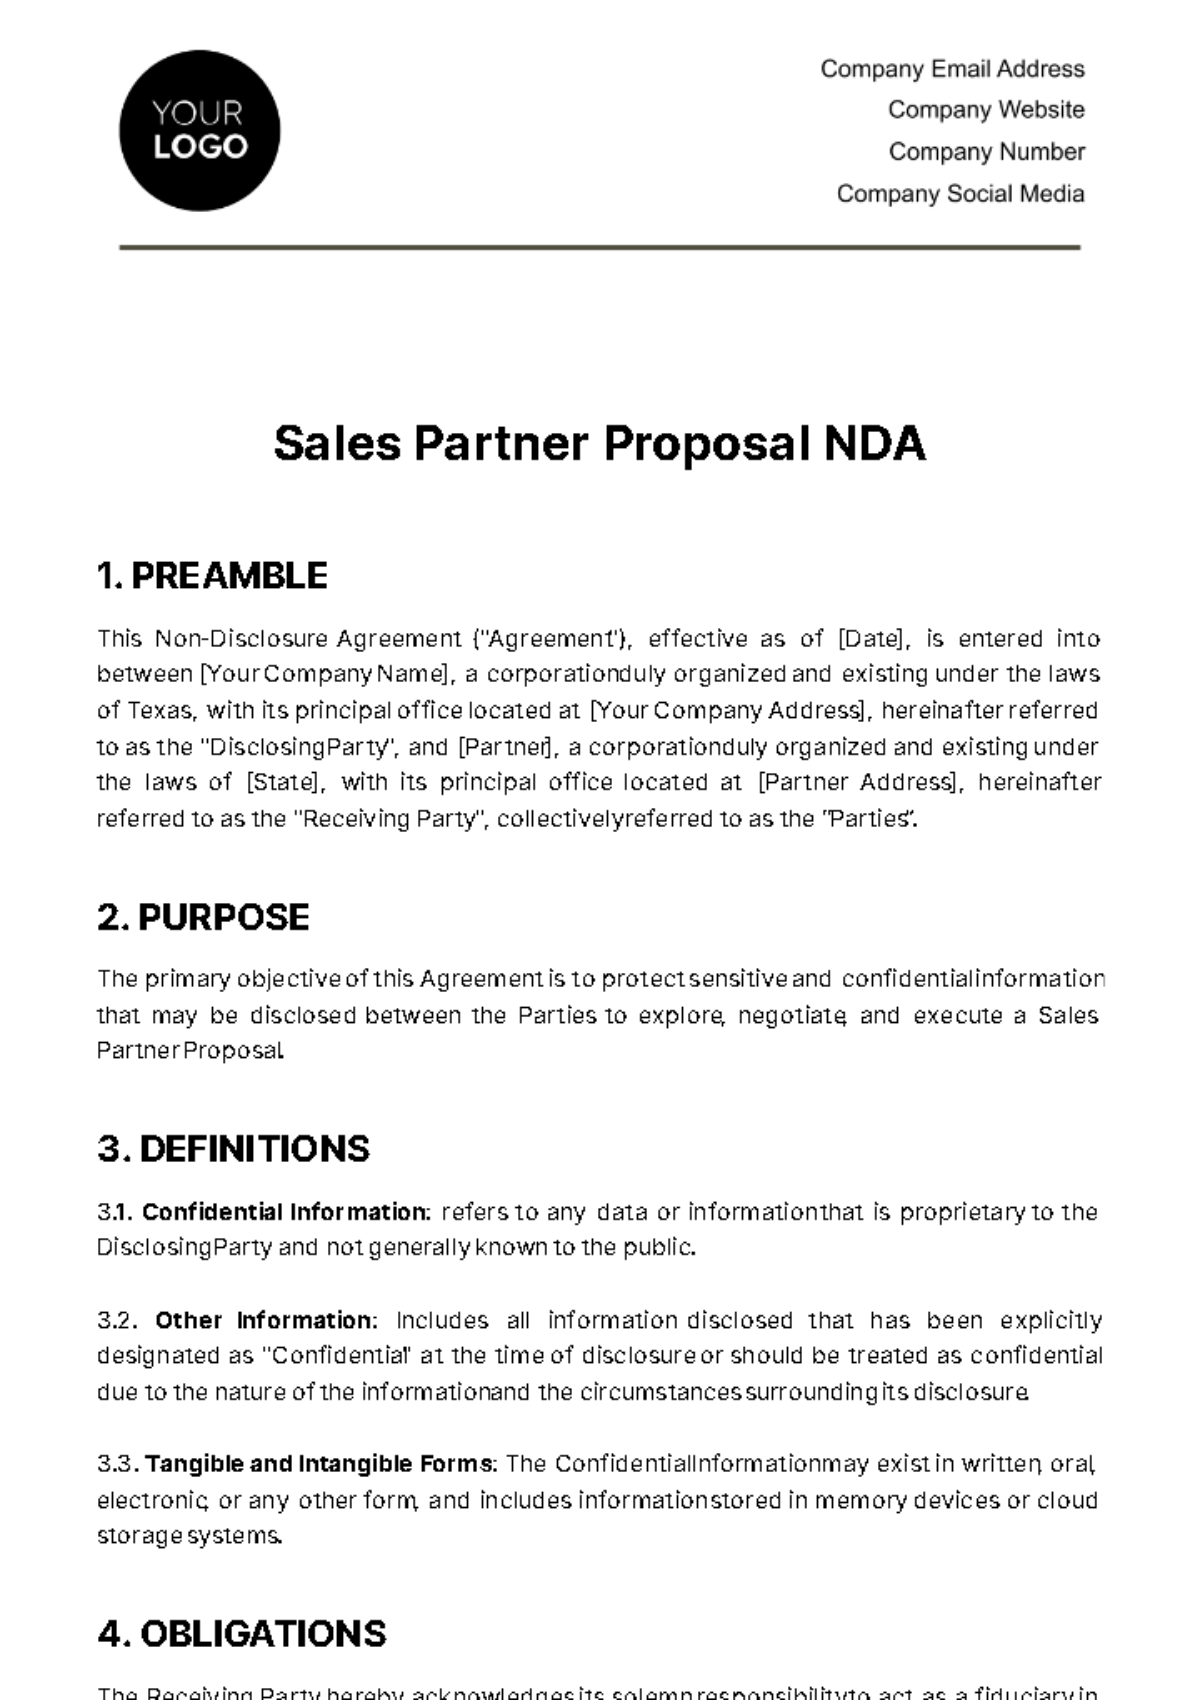 Free Sales Partner Proposal NDA Template